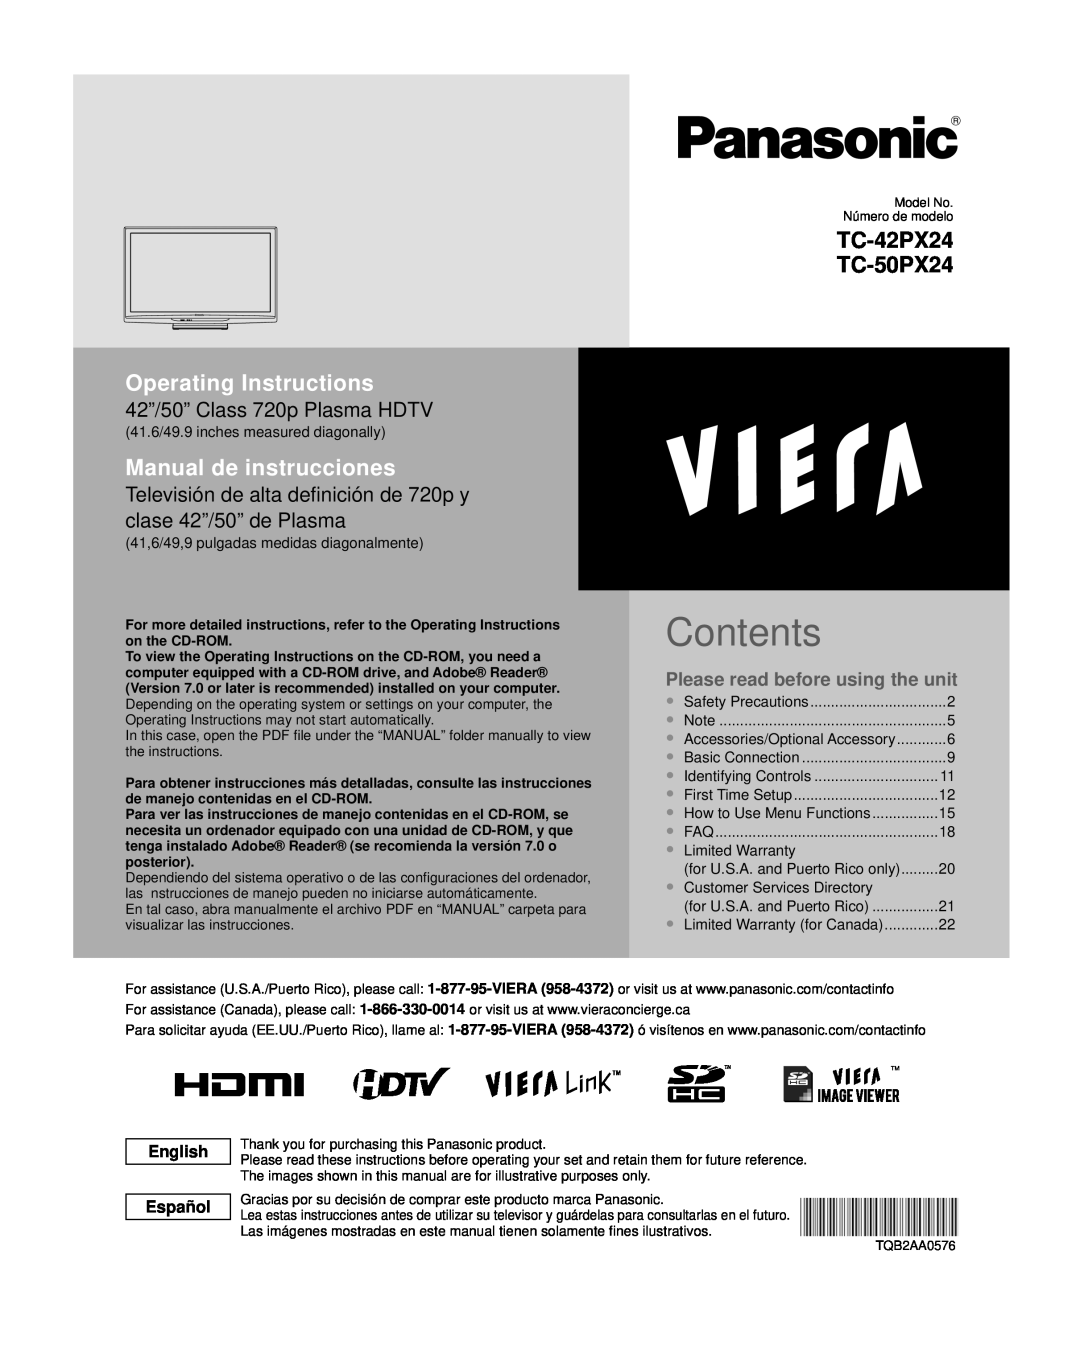 Panasonic TQB2AA0576 operating instructions Contents, Operating Instructions, Manual de instrucciones, TC-42PX24 TC-50PX24 